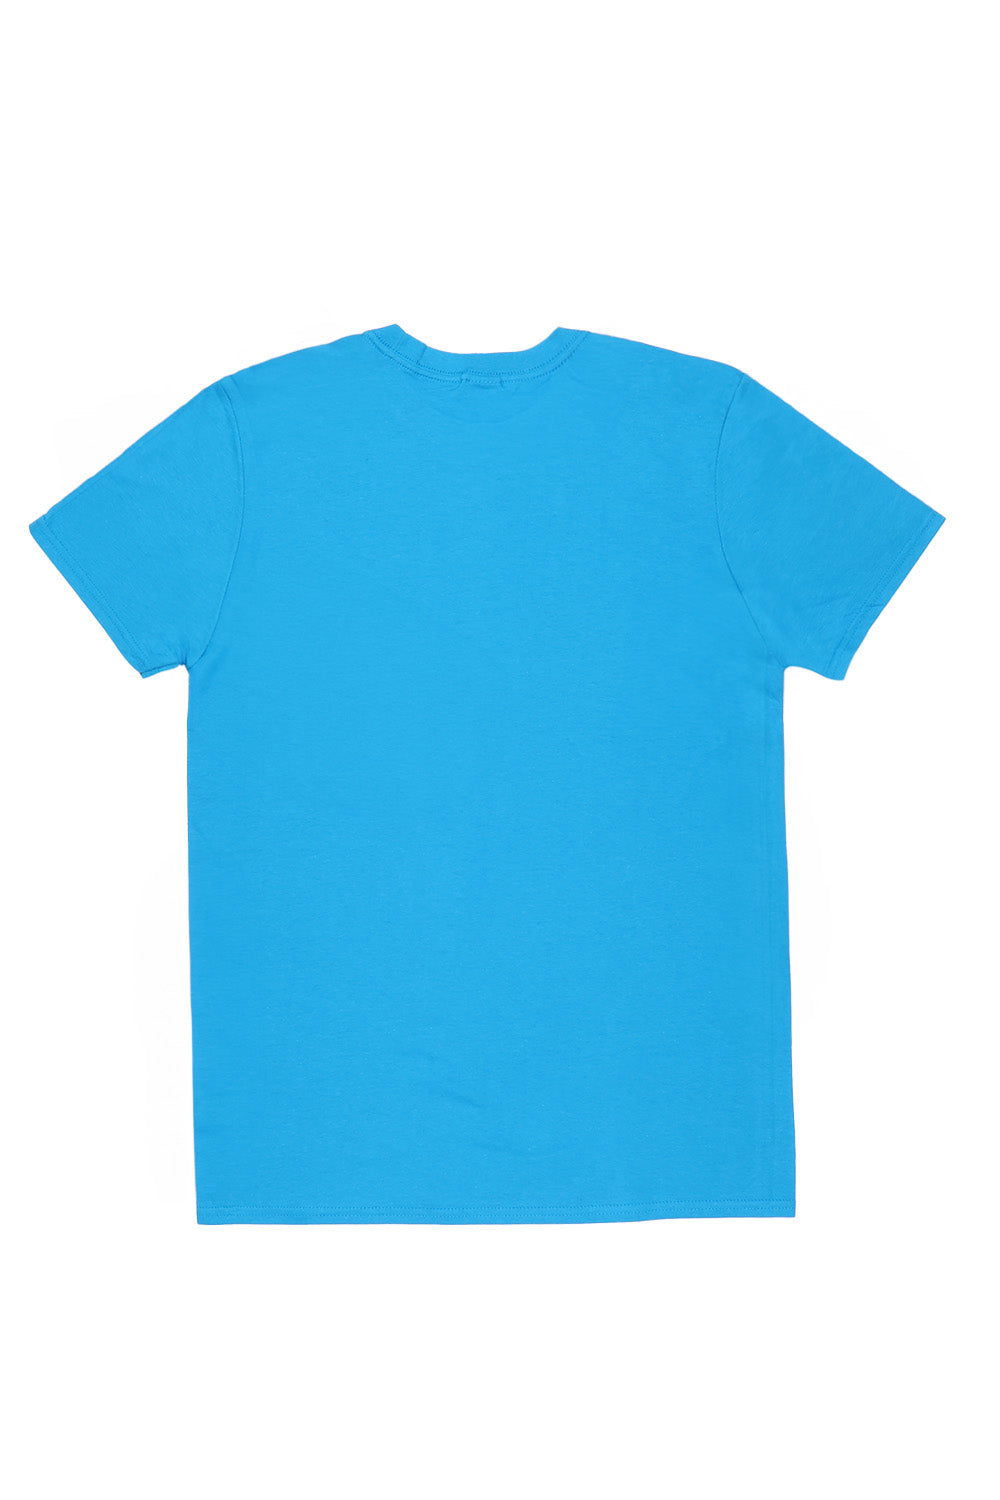 Manhattan T-Shirt in Sapphire Blue (Custom Packs)